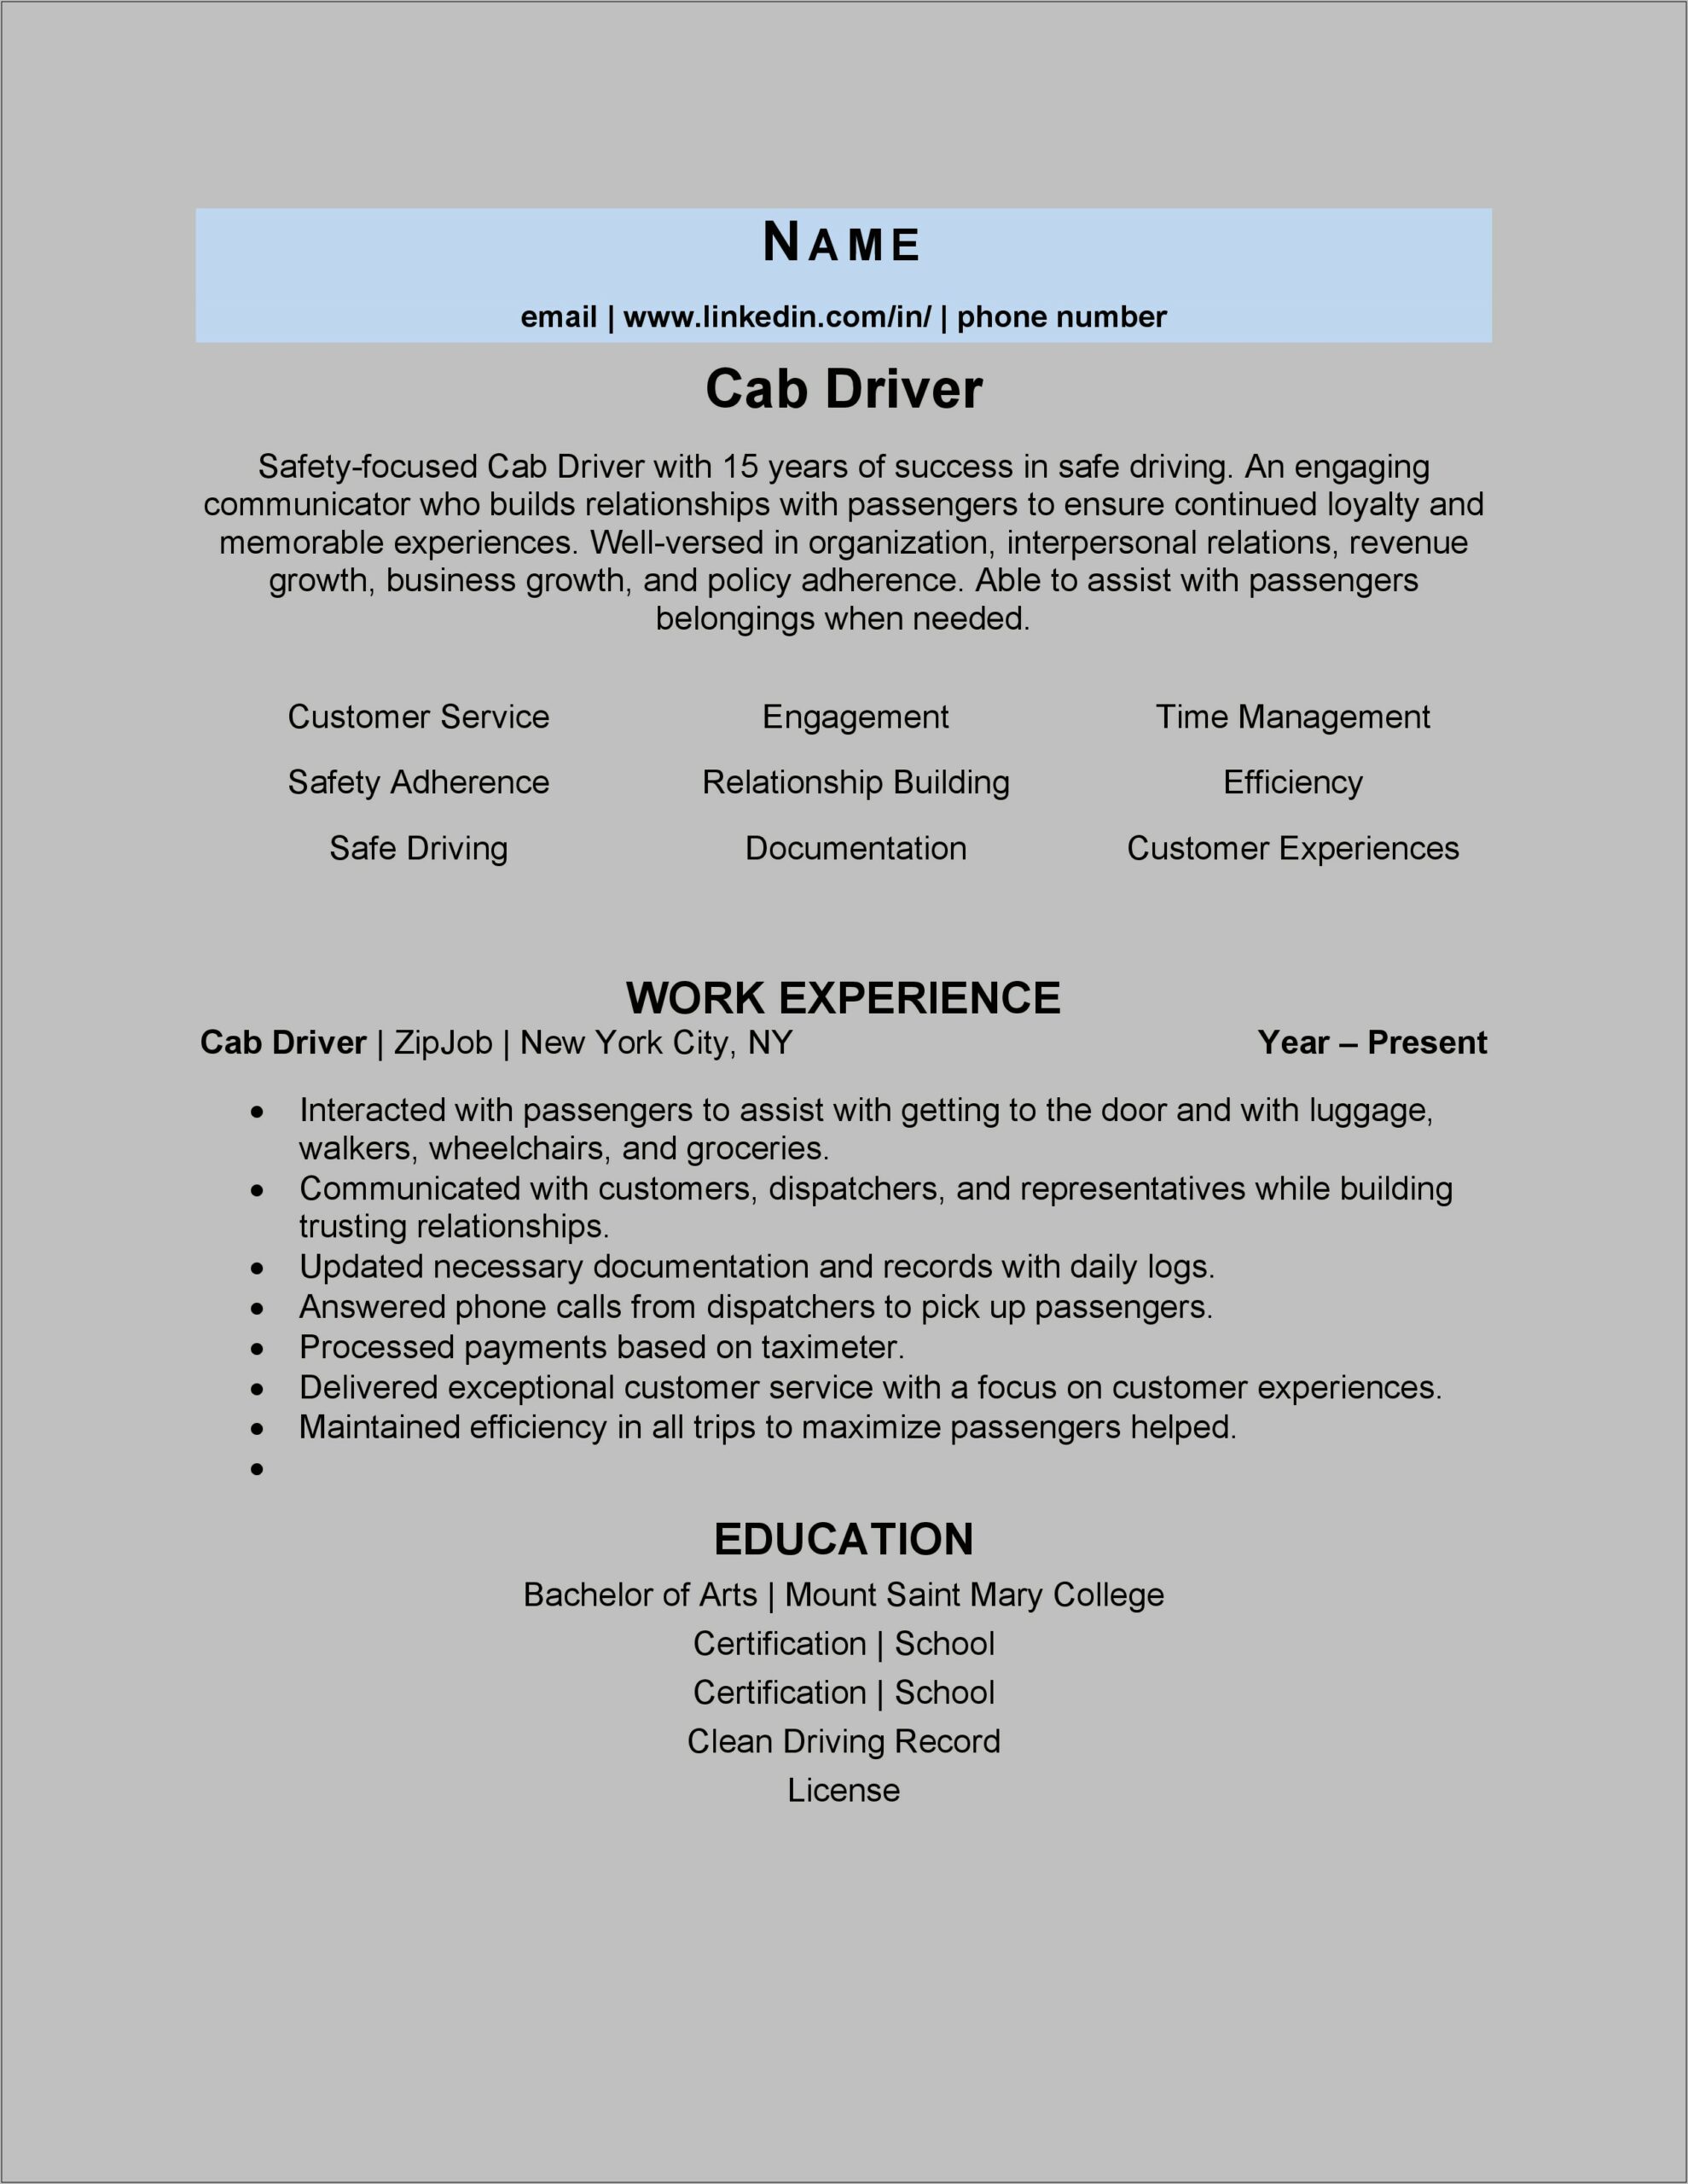 Cab Driver Job Description For Resume